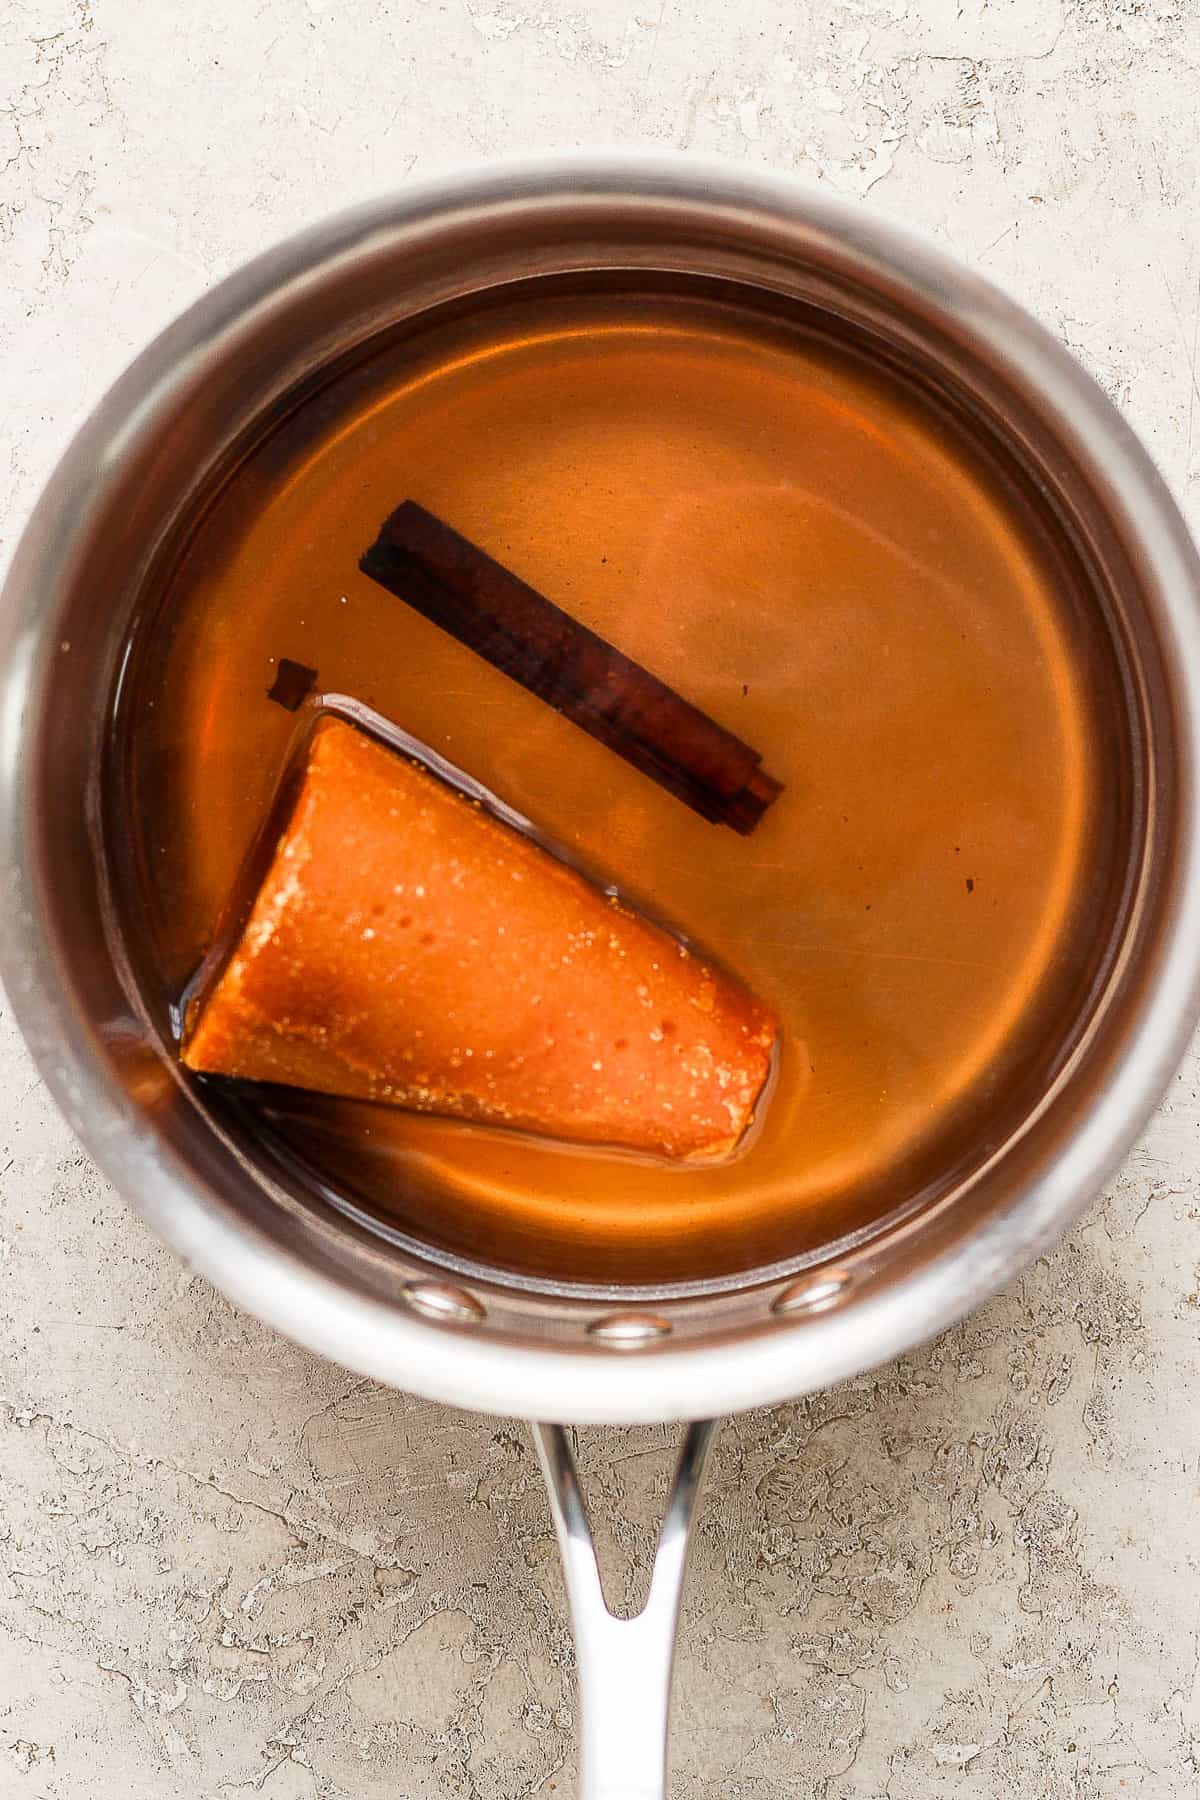 Water, piloncillo, and a cinnamon stick in a pot.